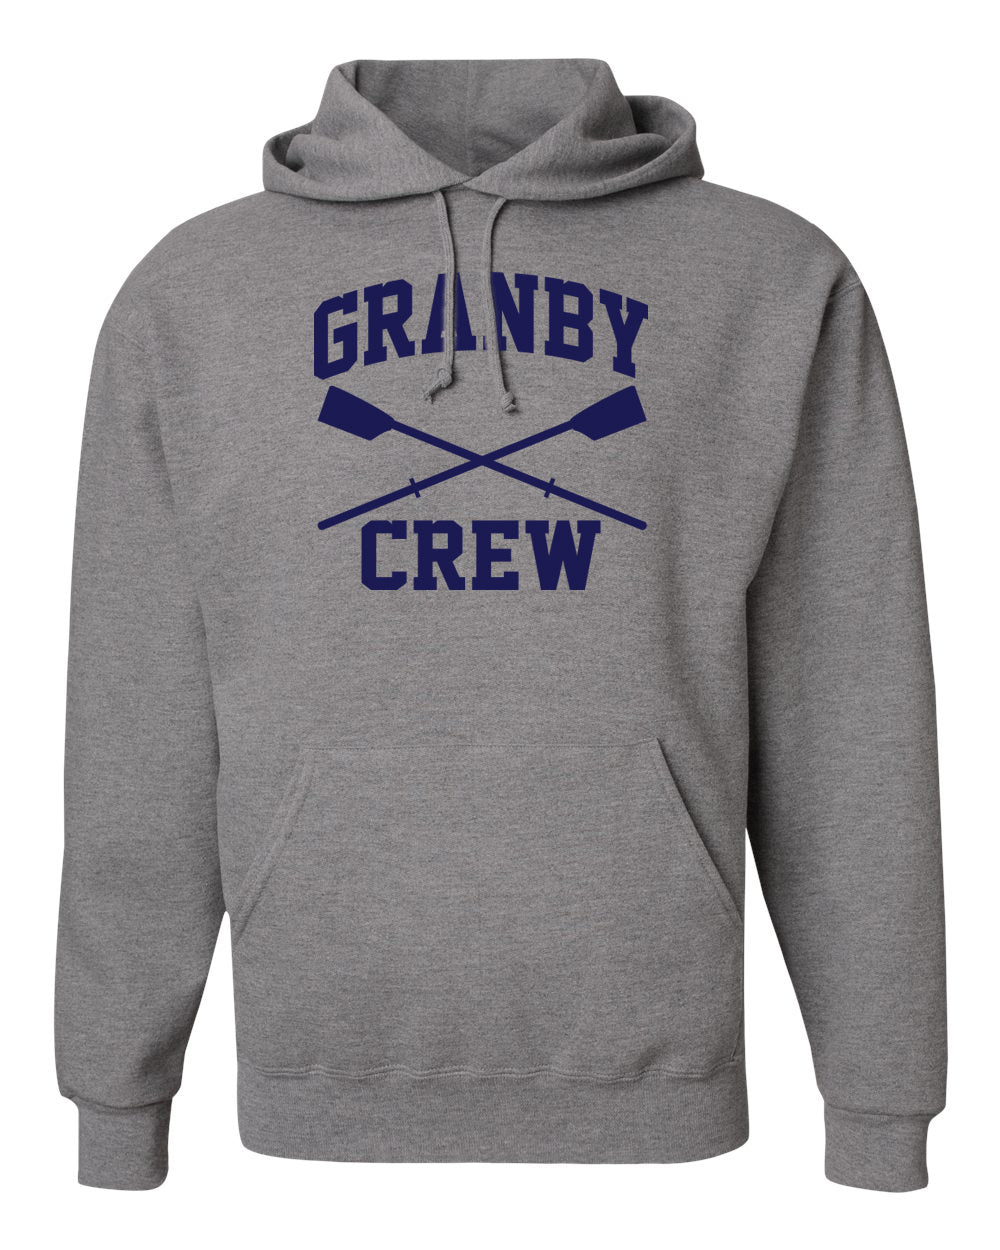 50/50 Hooded Granby Crew Pullover Sweatshirt